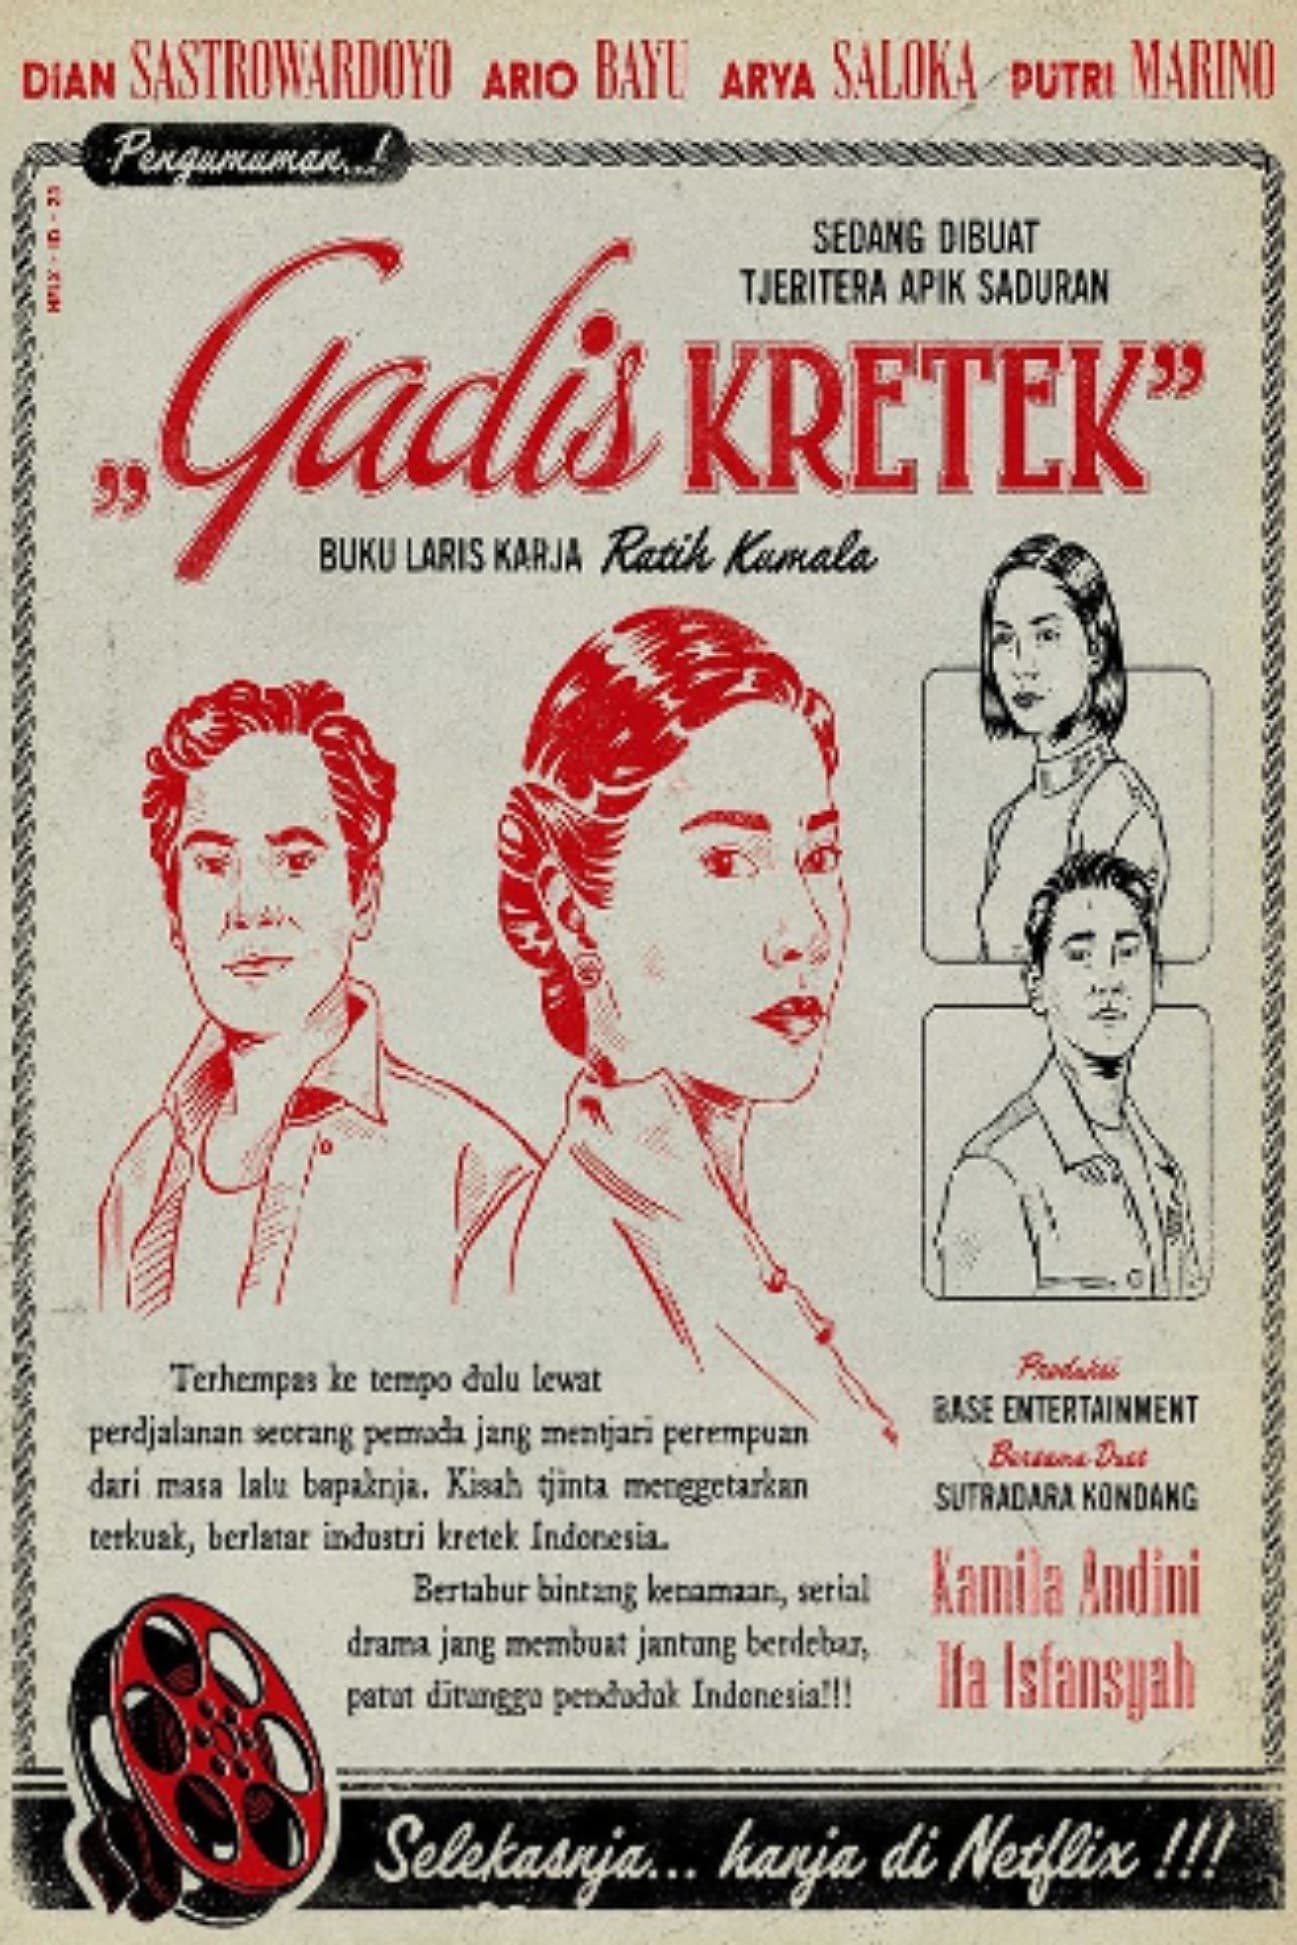 TV ratings for Cigarette Girl (Gadis Kretek) in Alemania. Netflix TV series